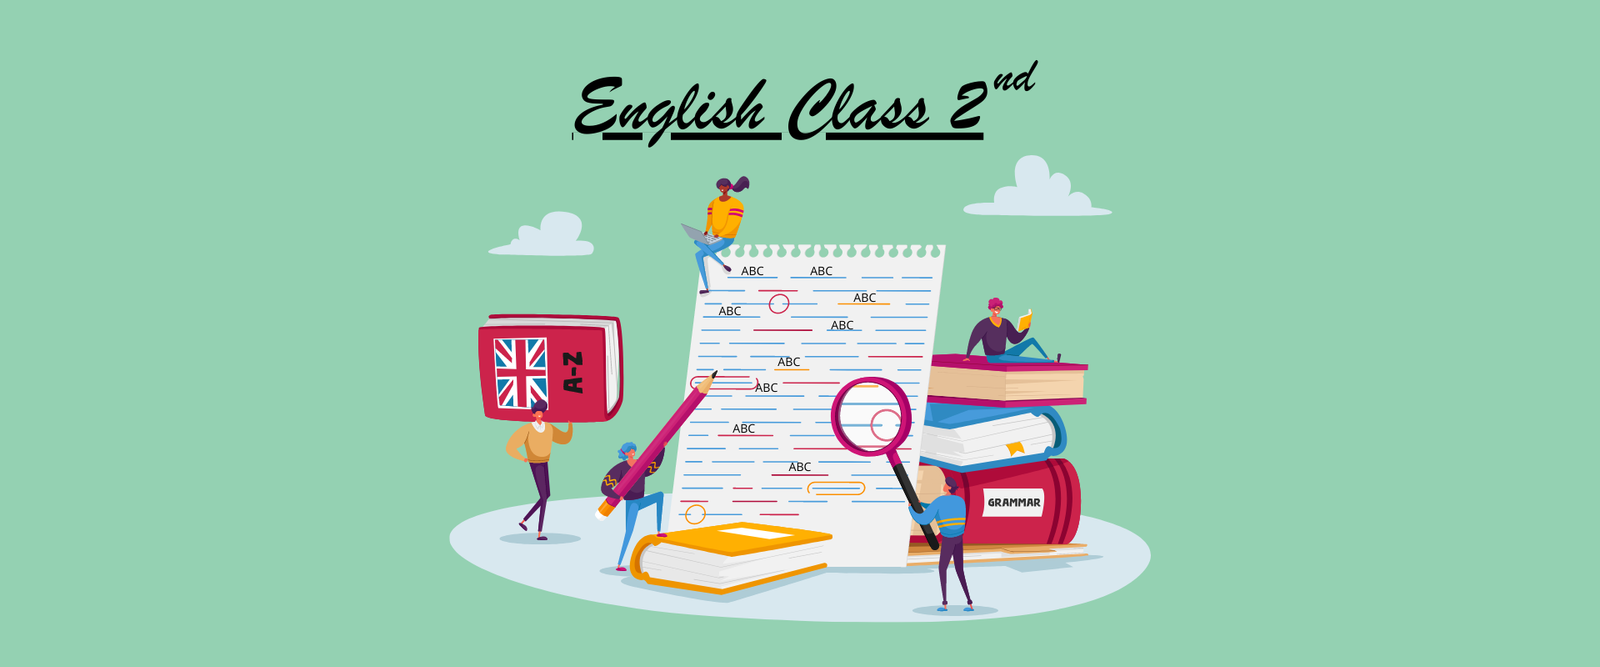 English Class 2